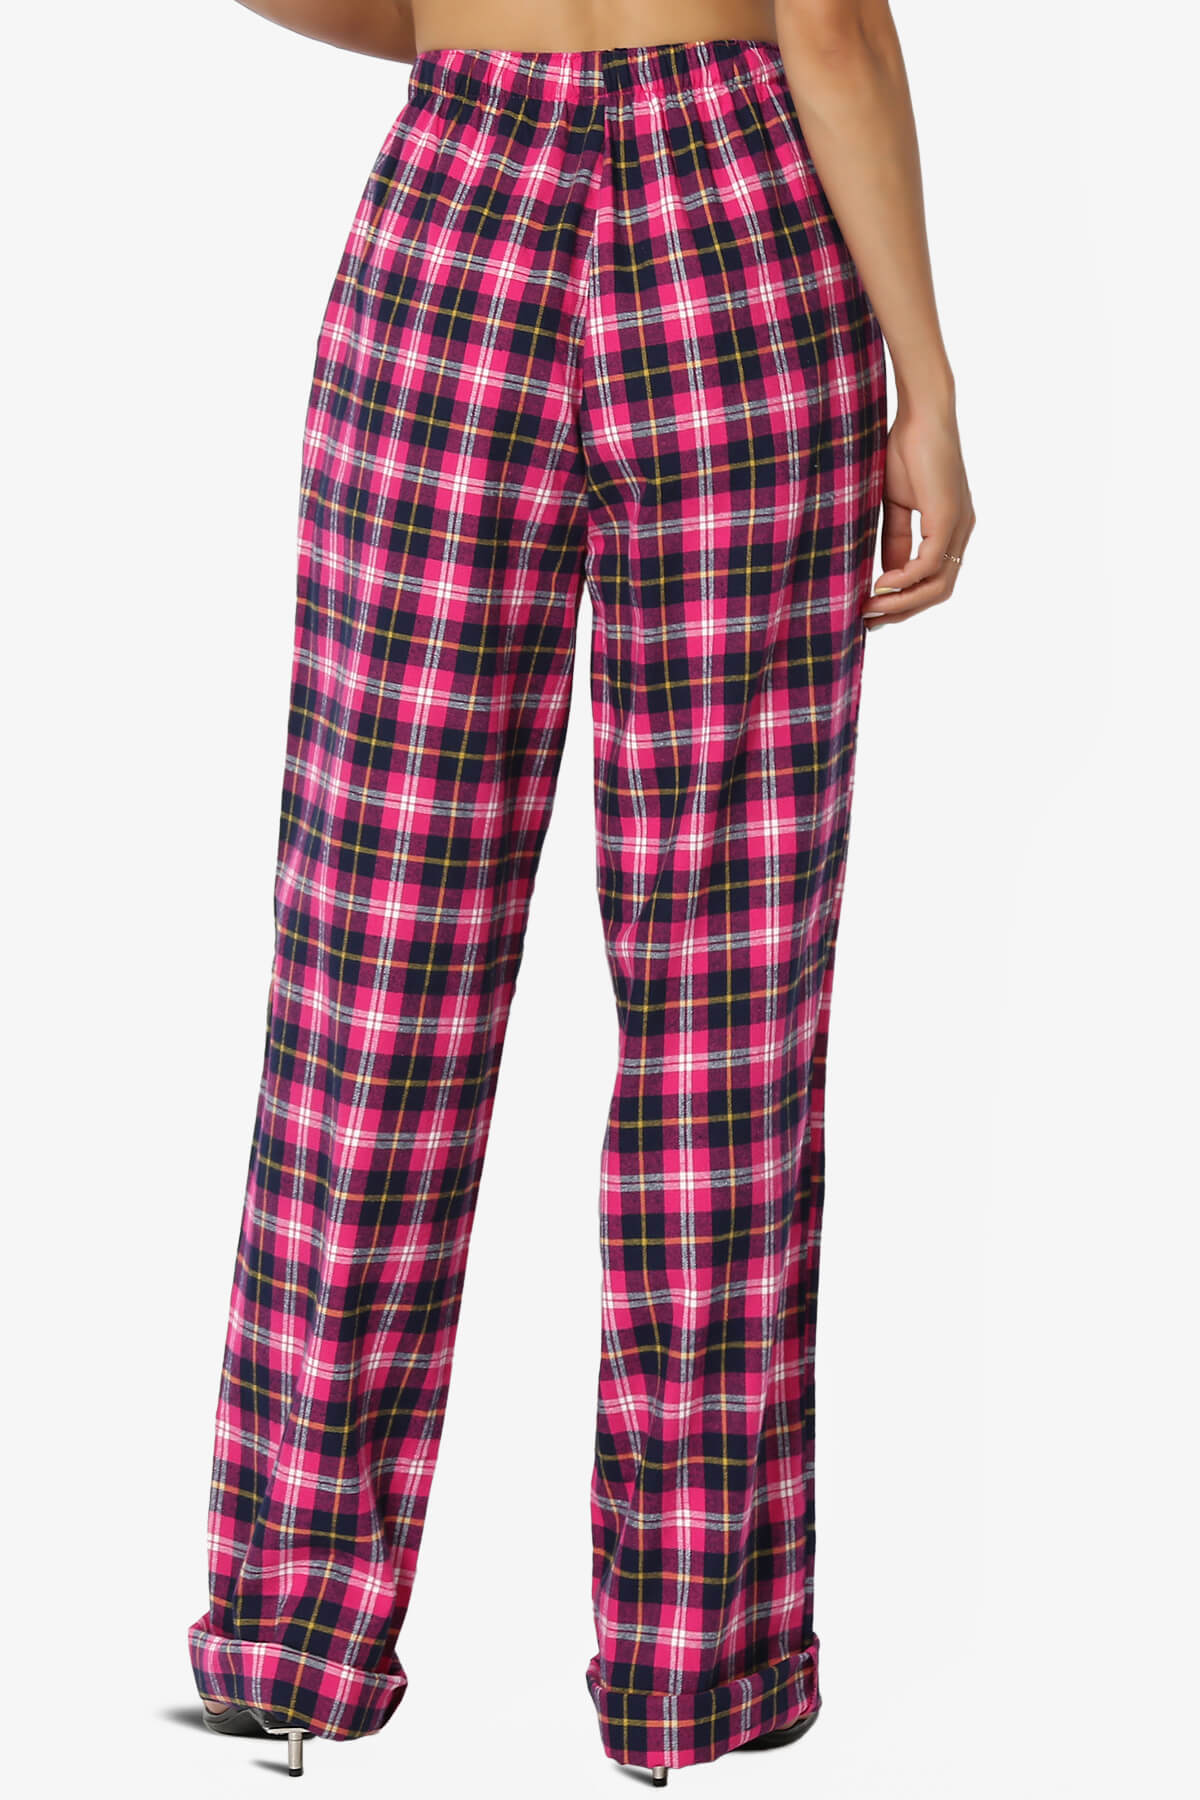 Pajama Party Pants - Grey/Pink Plaid - SIZE XS – RayLarae Boutique